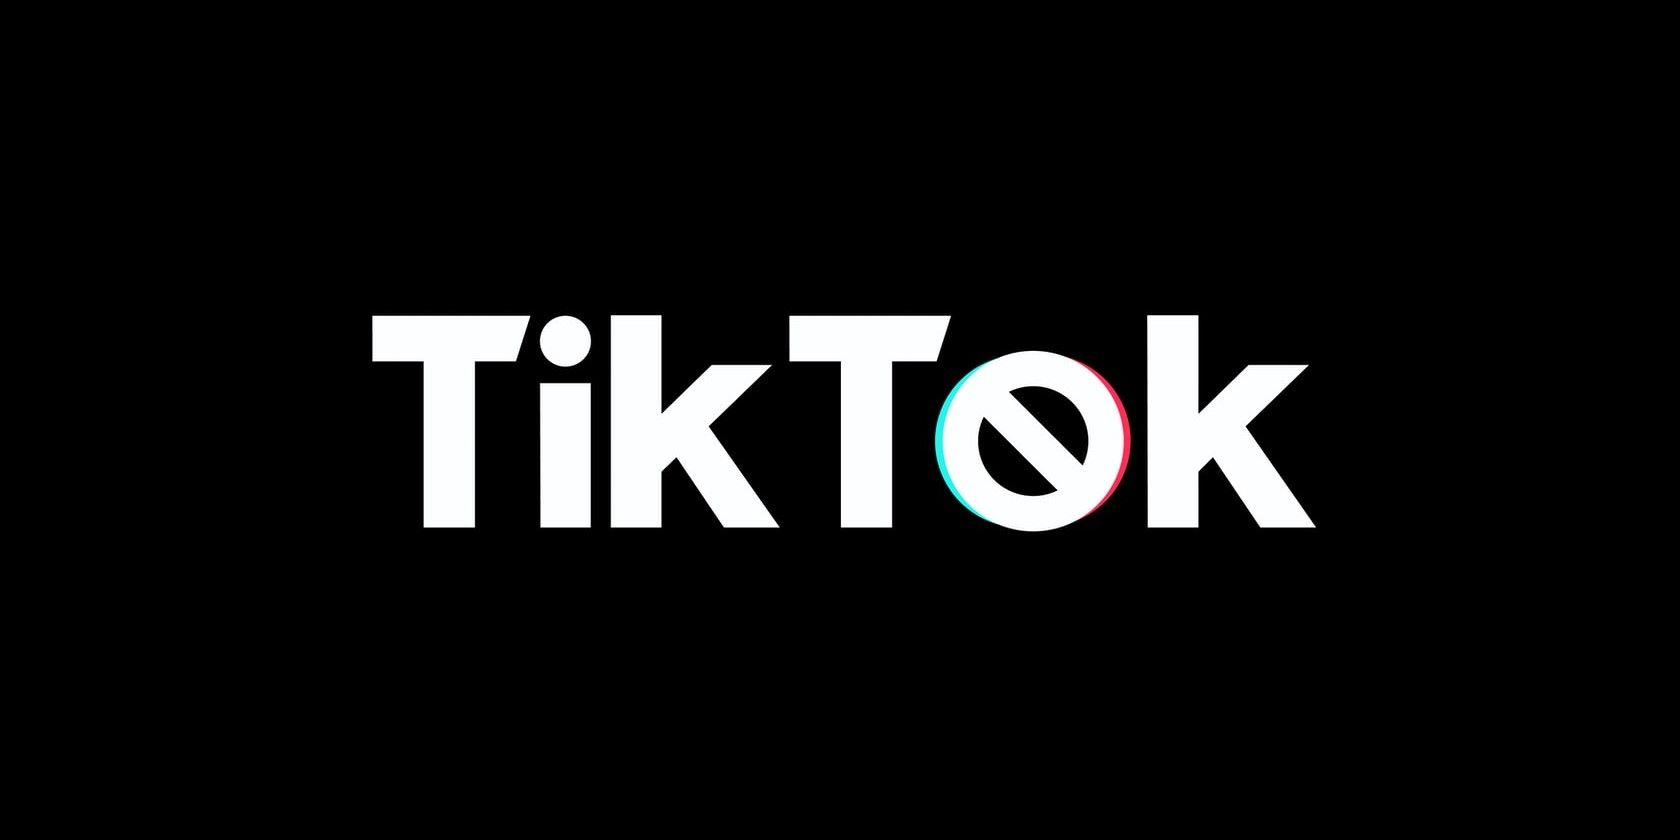 tiktok wechat ban news - TikTok e WeChat saranno presto banditi negli Stati Uniti